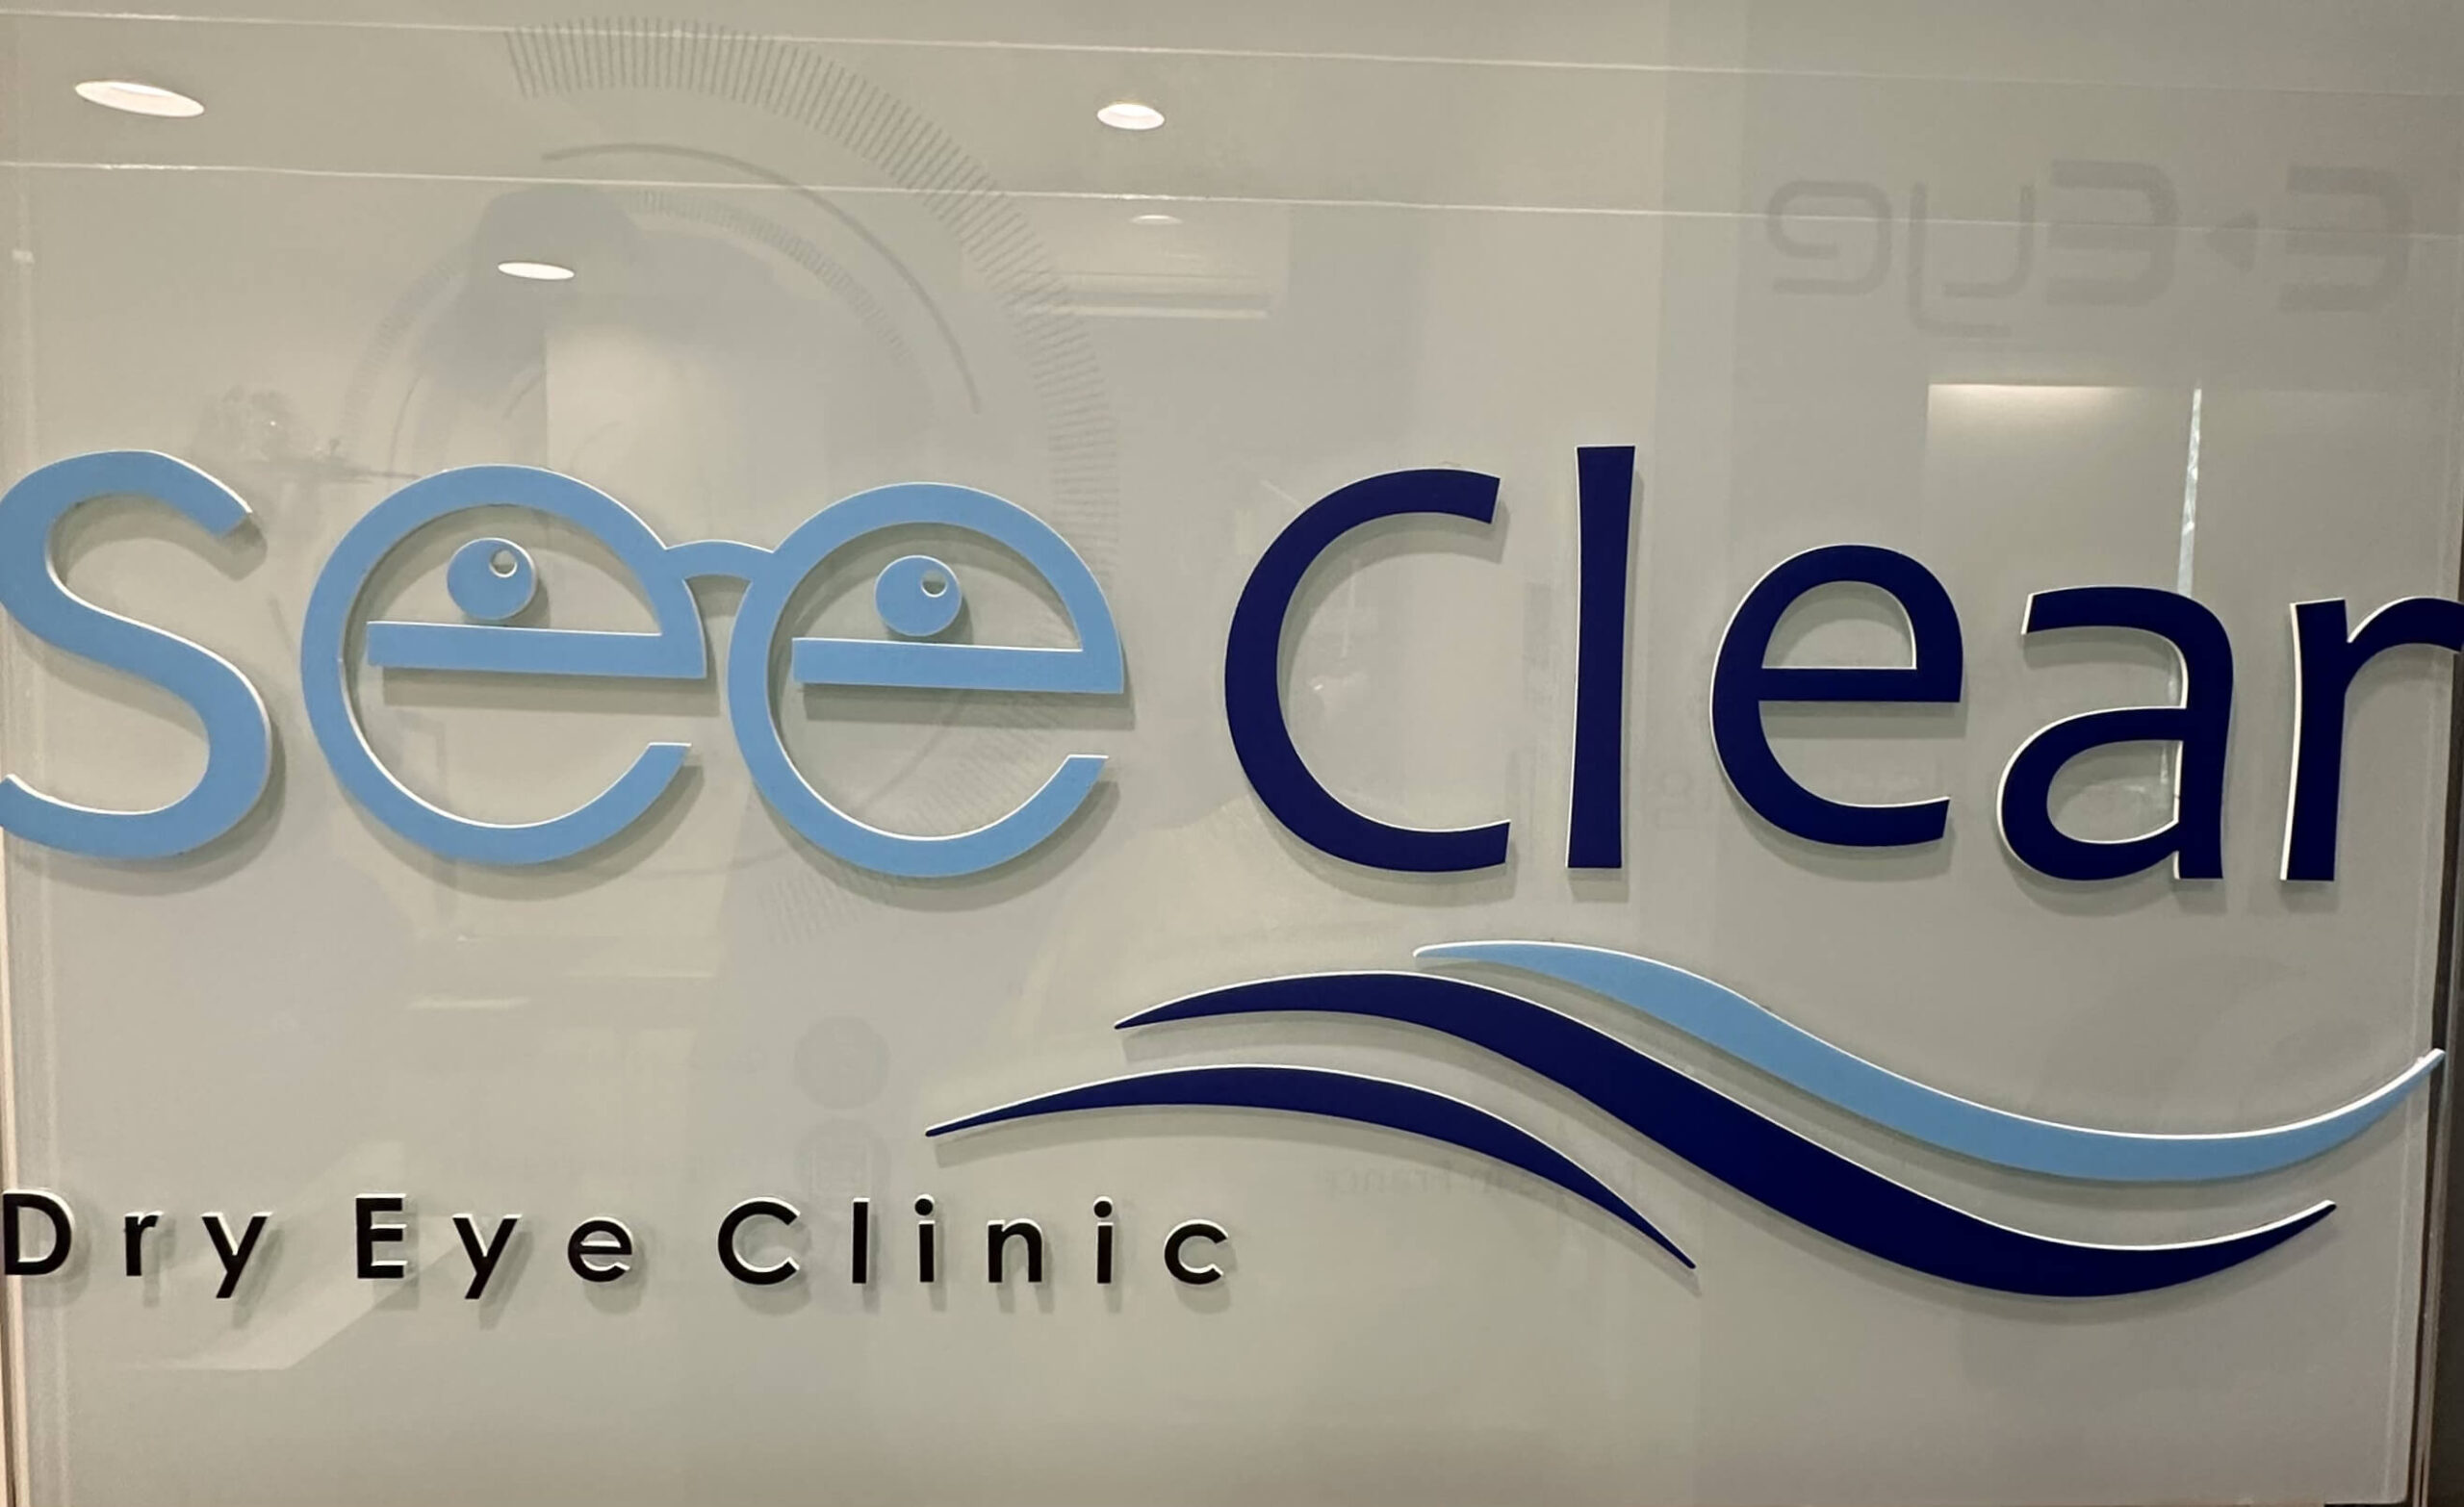 Dry Eye clinic